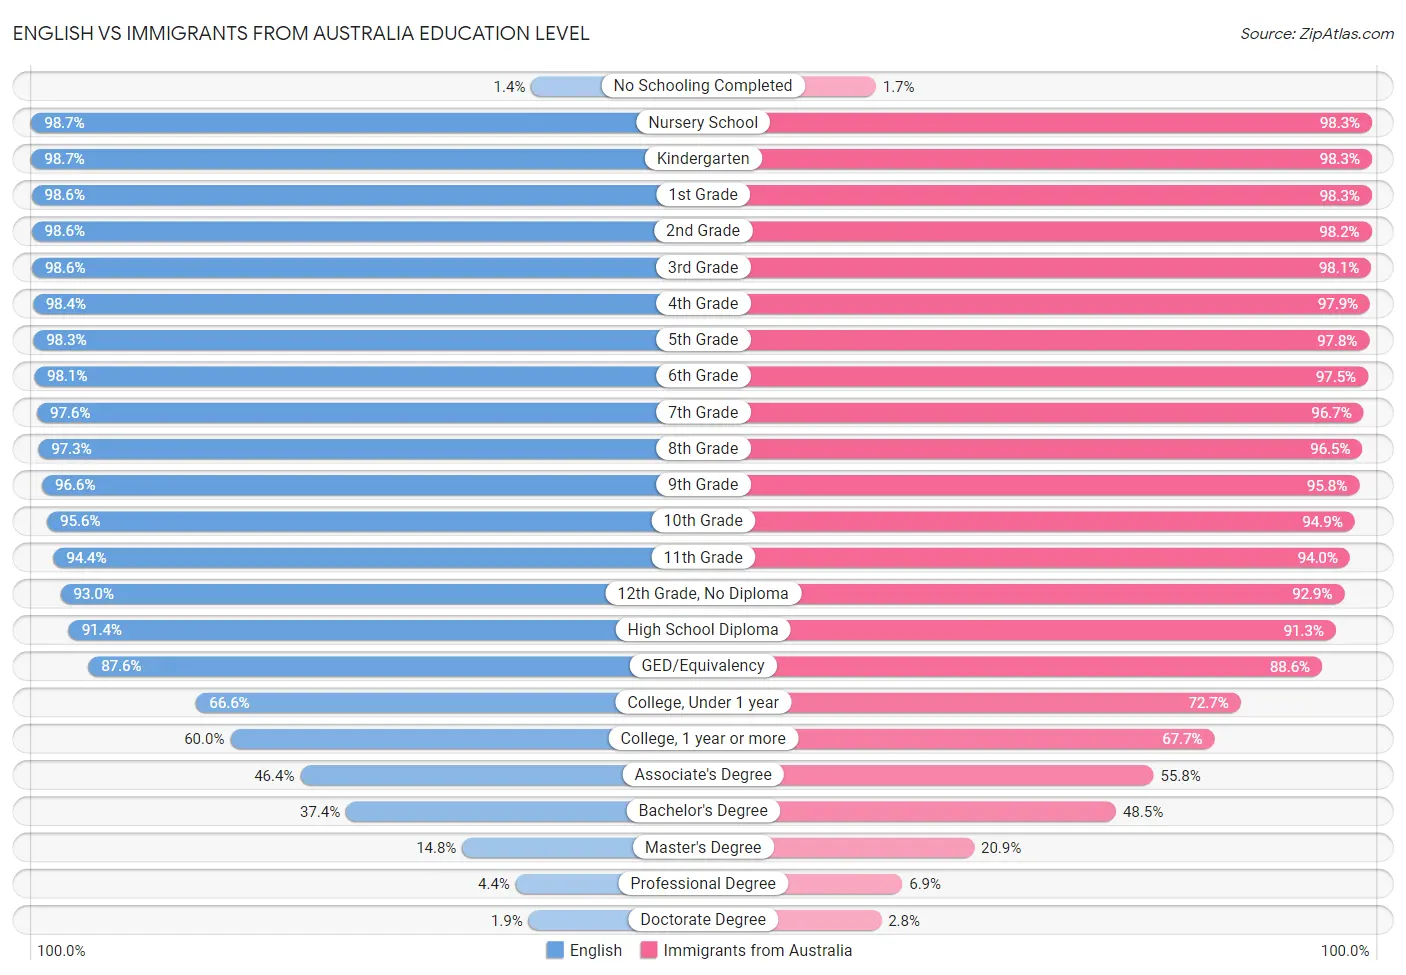 English vs Immigrants from Australia Education Level